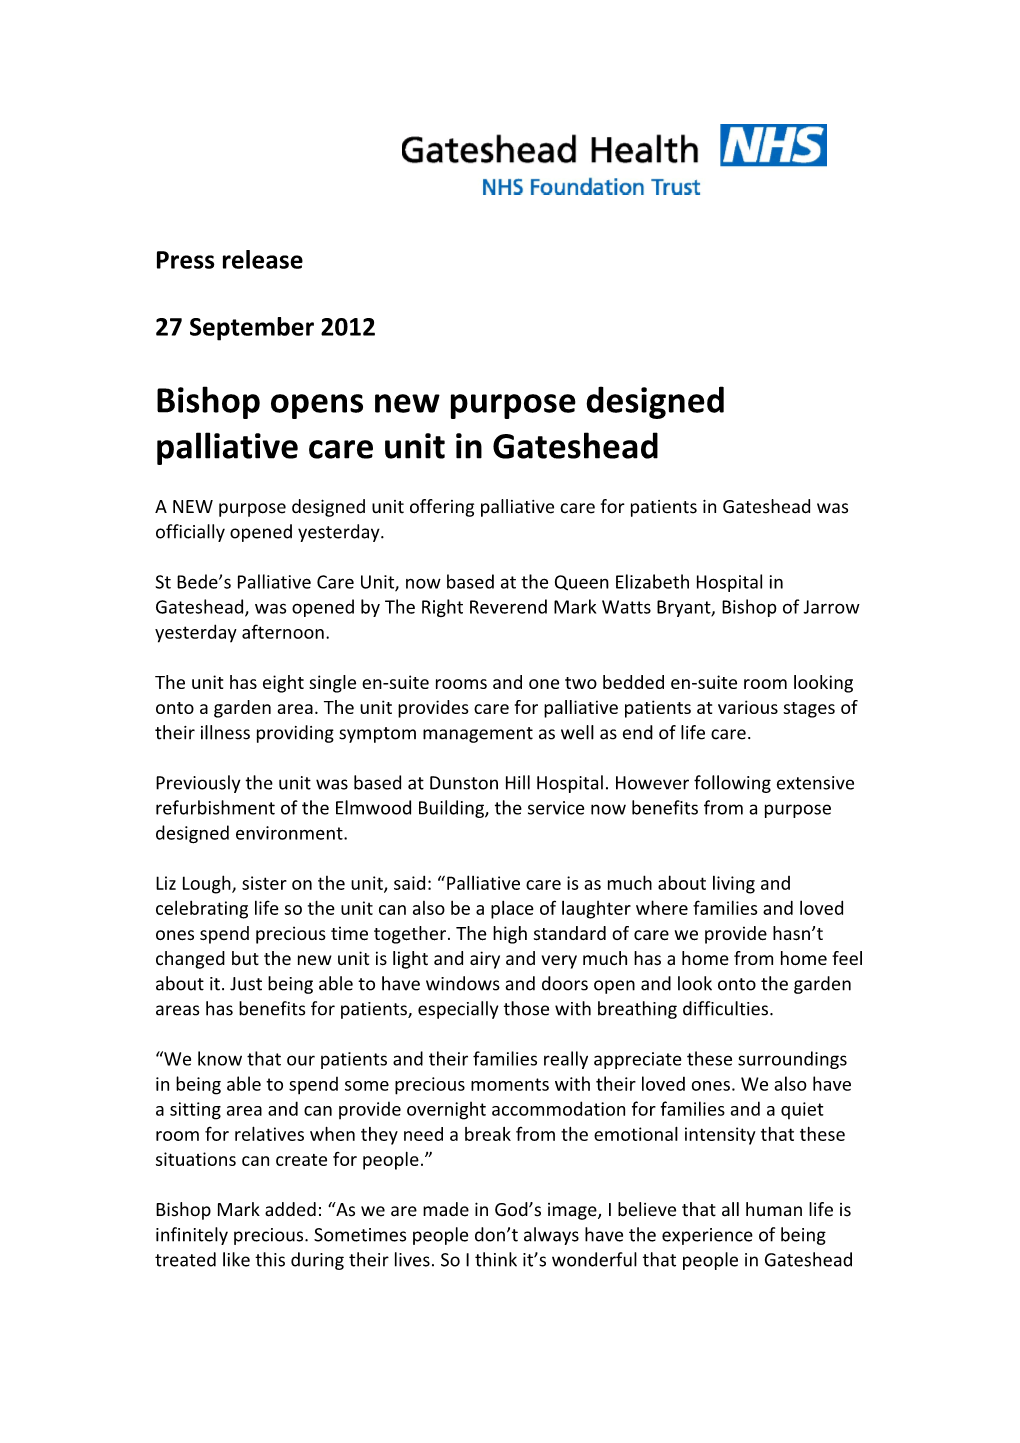 Bishop Opens New Purpose Designed Palliative Care Unit in Gateshead